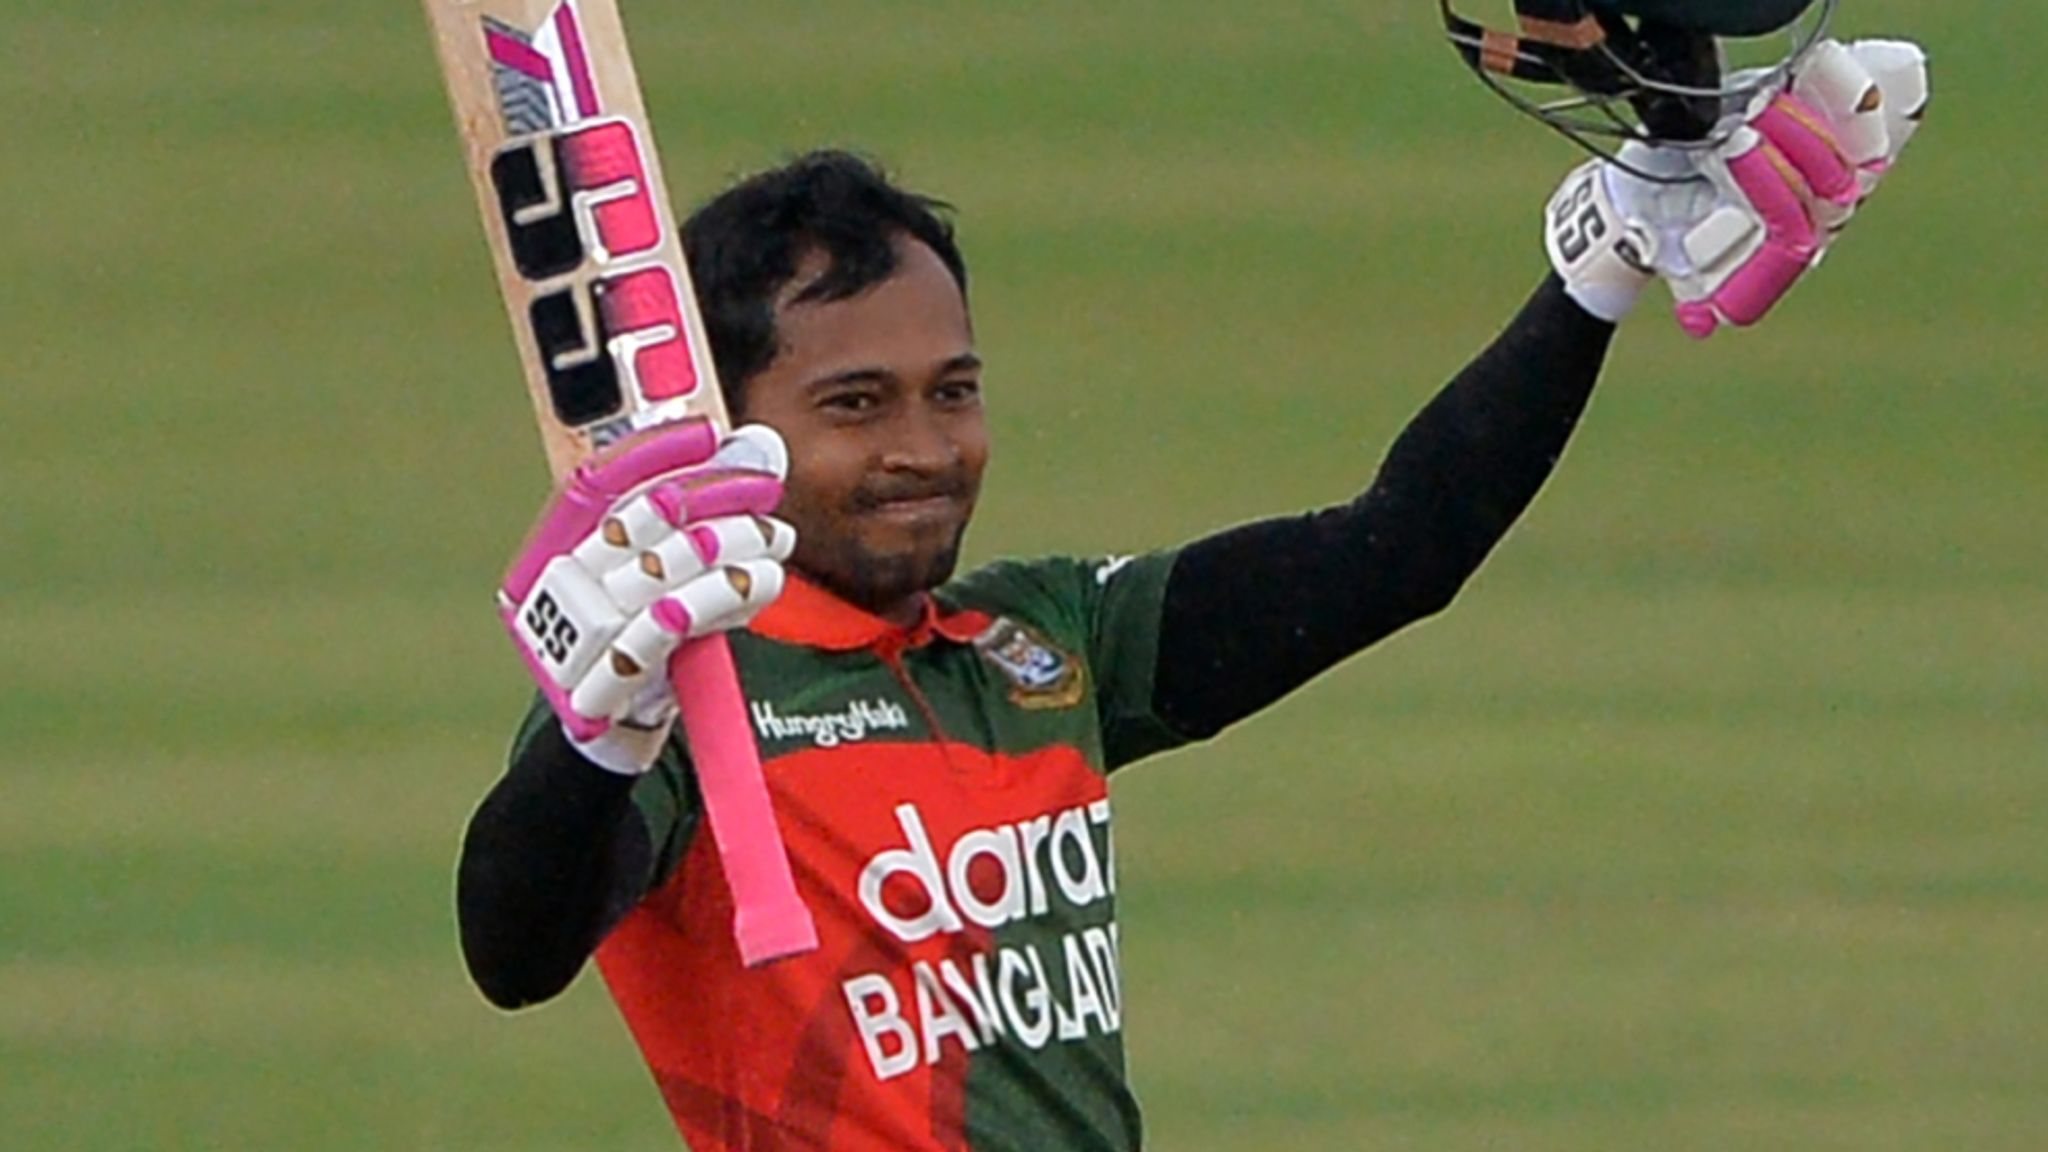 Bangladesh beat Sri Lanka in ODI series for first time as Mushfiqur Rahim  hits 125 in Dhaka | Cricket News | Sky Sports